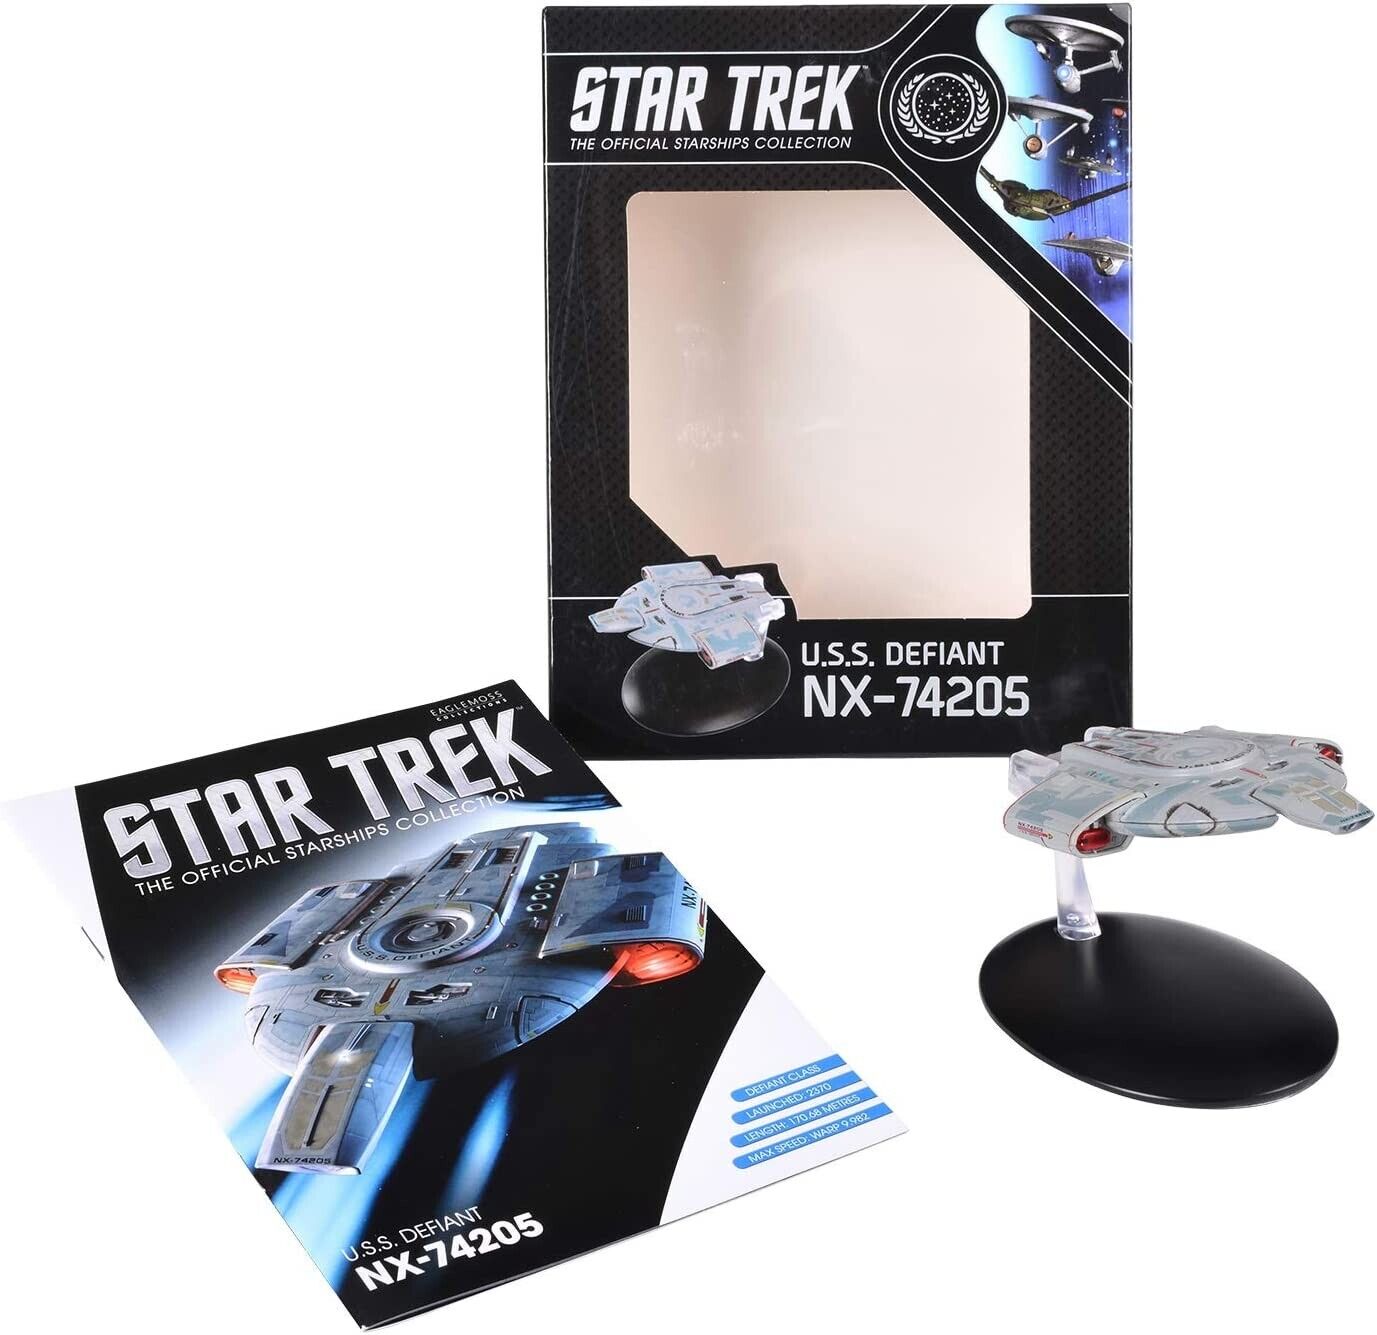 Eaglemoss Star Trek Starships USS Defiant NX-74205 Boxed With Small Magazine